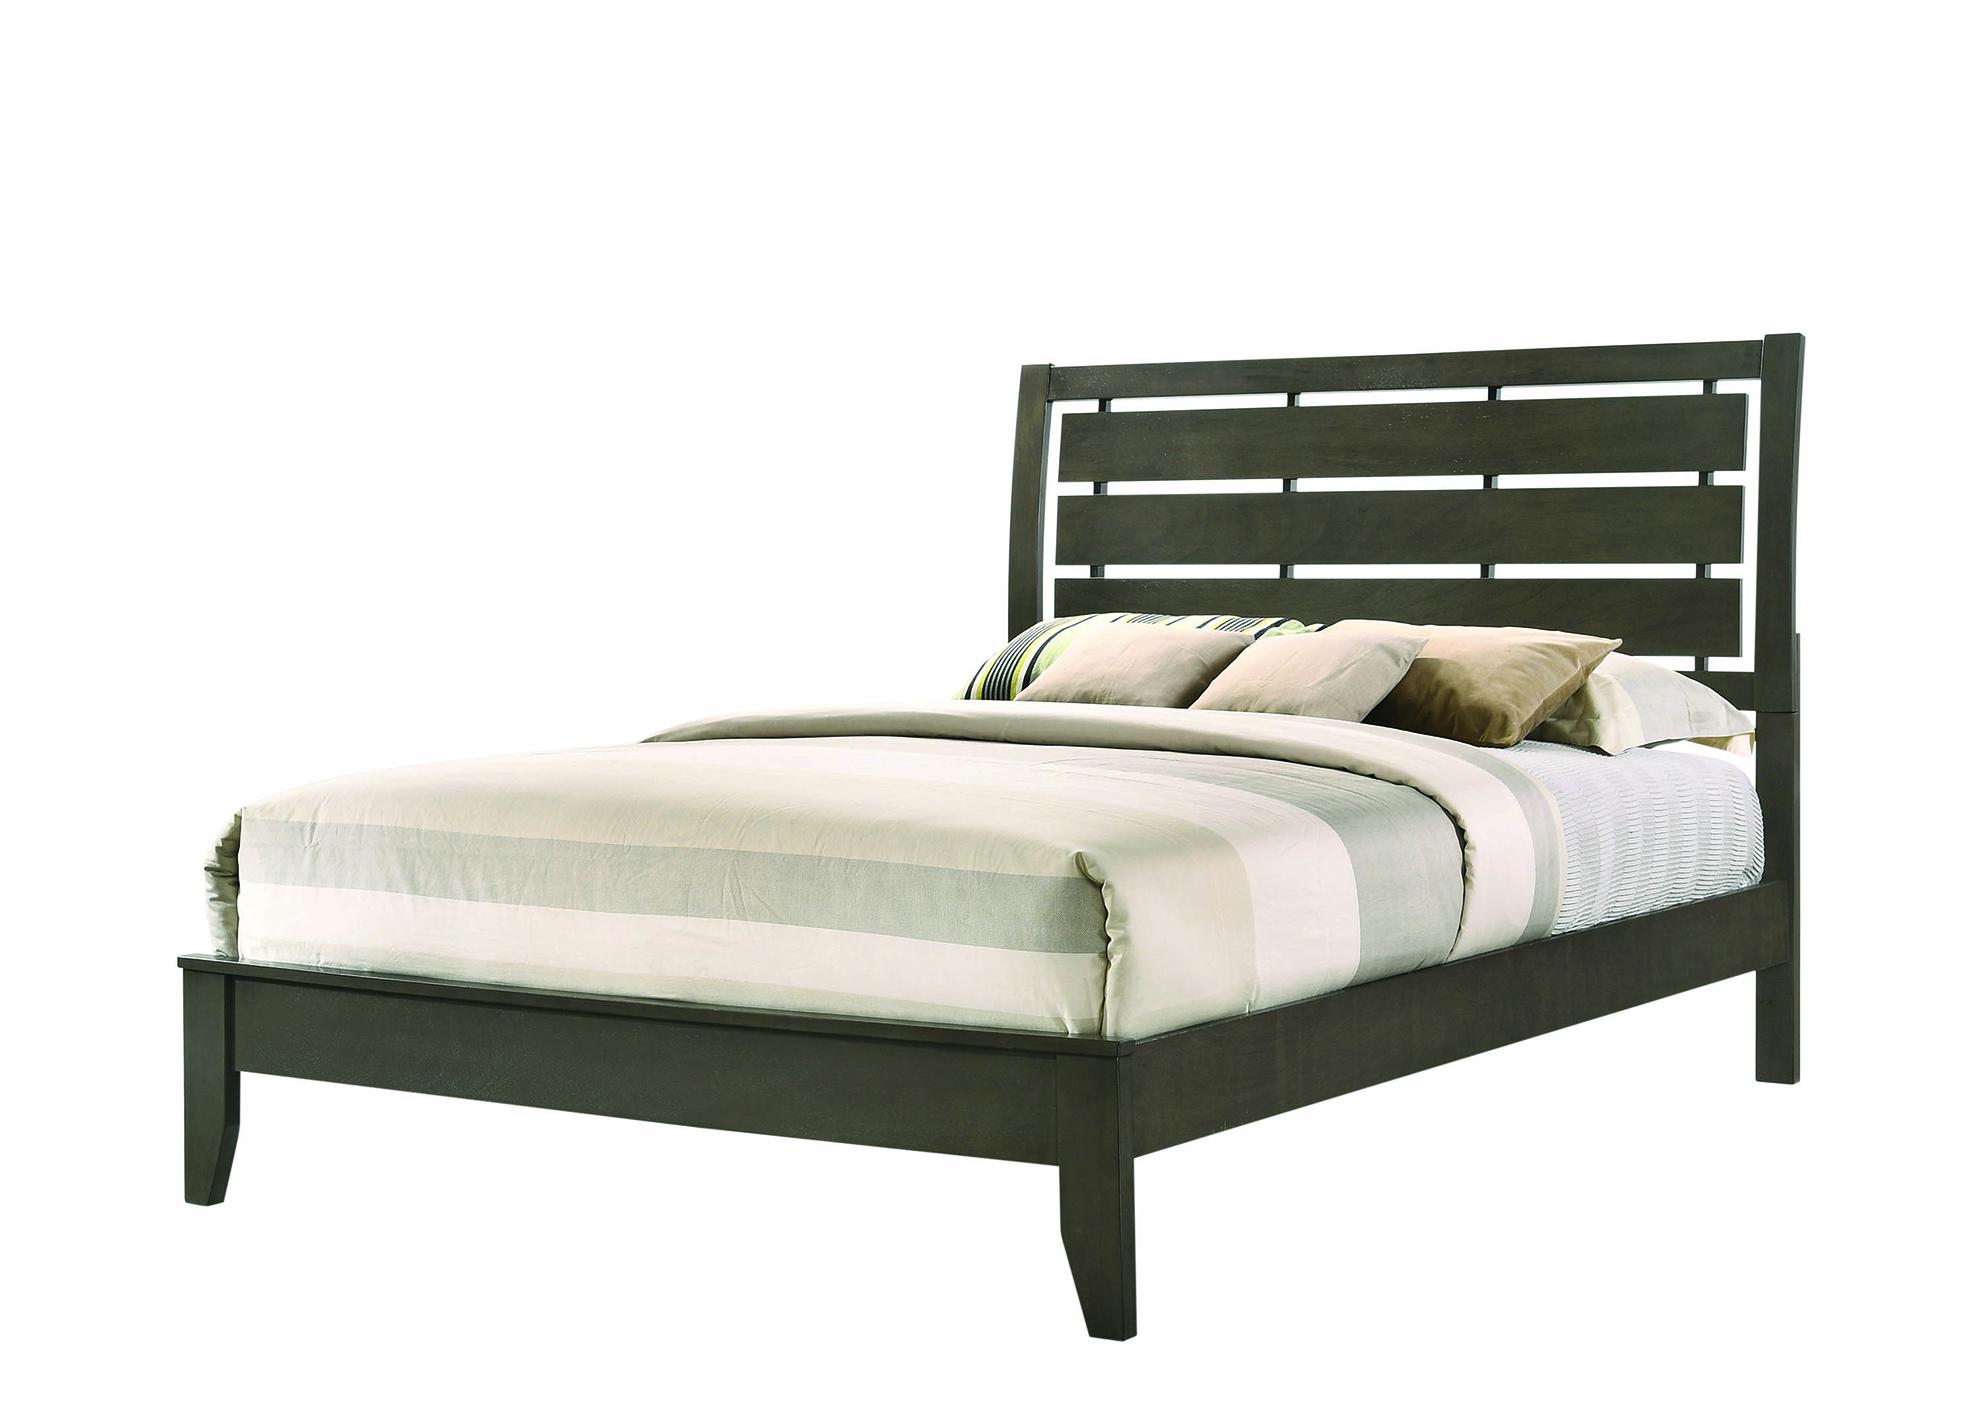 

    
Transitional Mod Gray Wood Full Bedroom Set 6pcs Coaster 215841F Serenity
